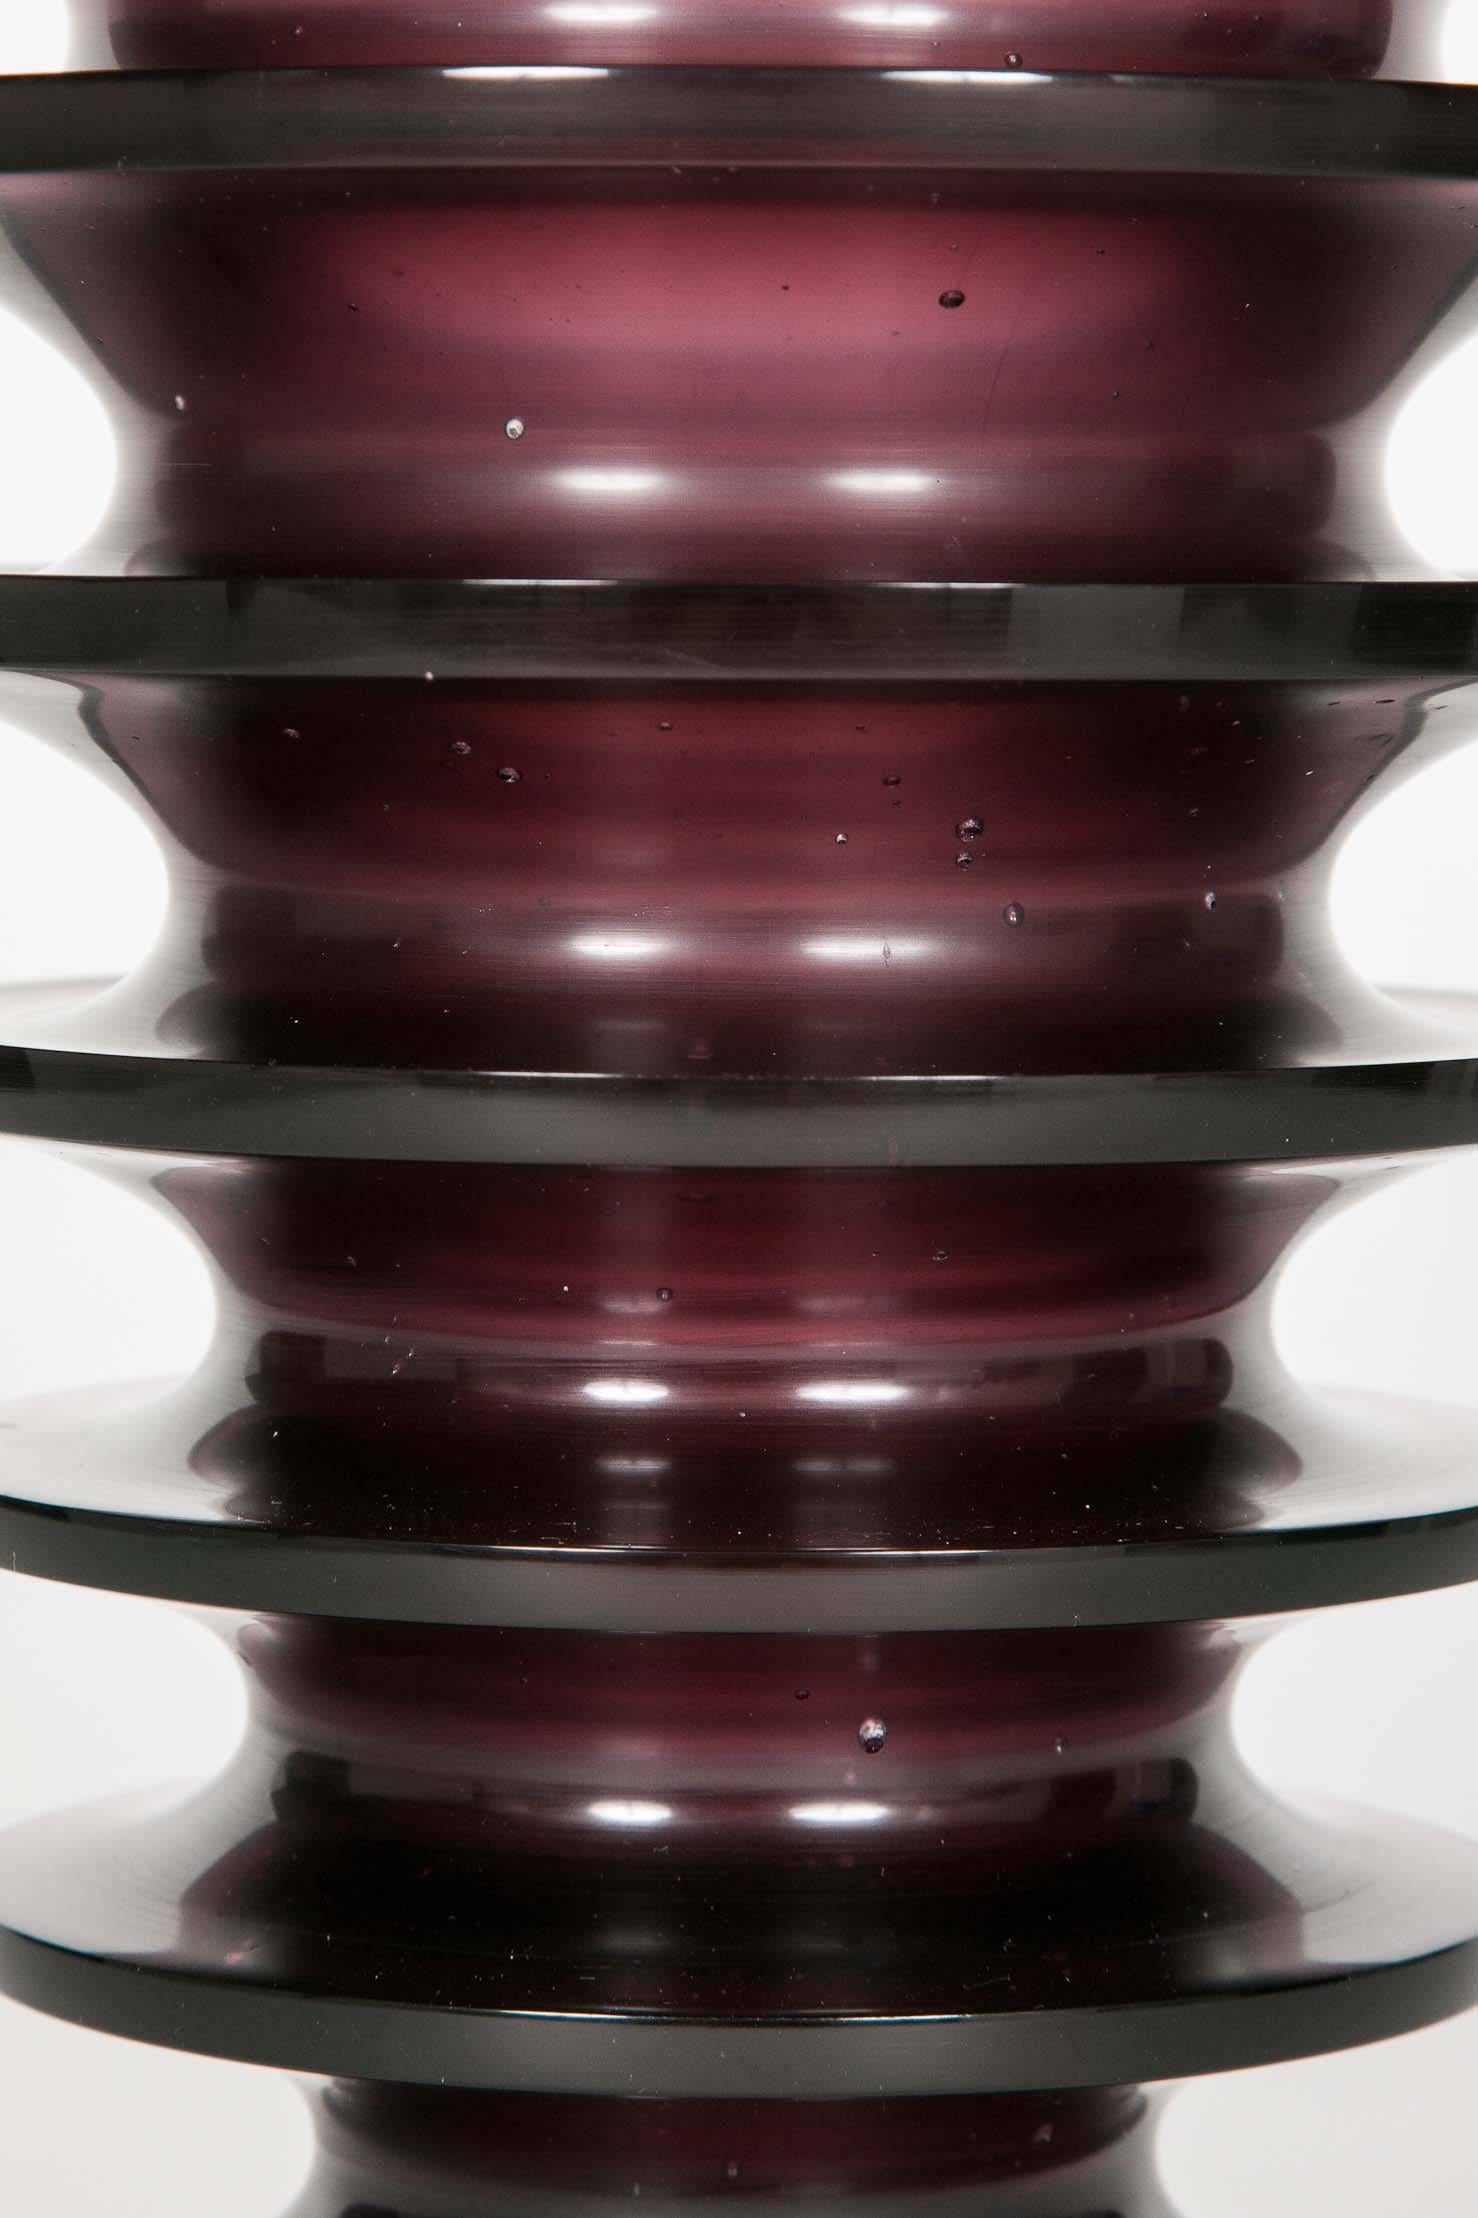 British Leila, a unique dark purple / blackberry coloured glass vase by Paul Stopler